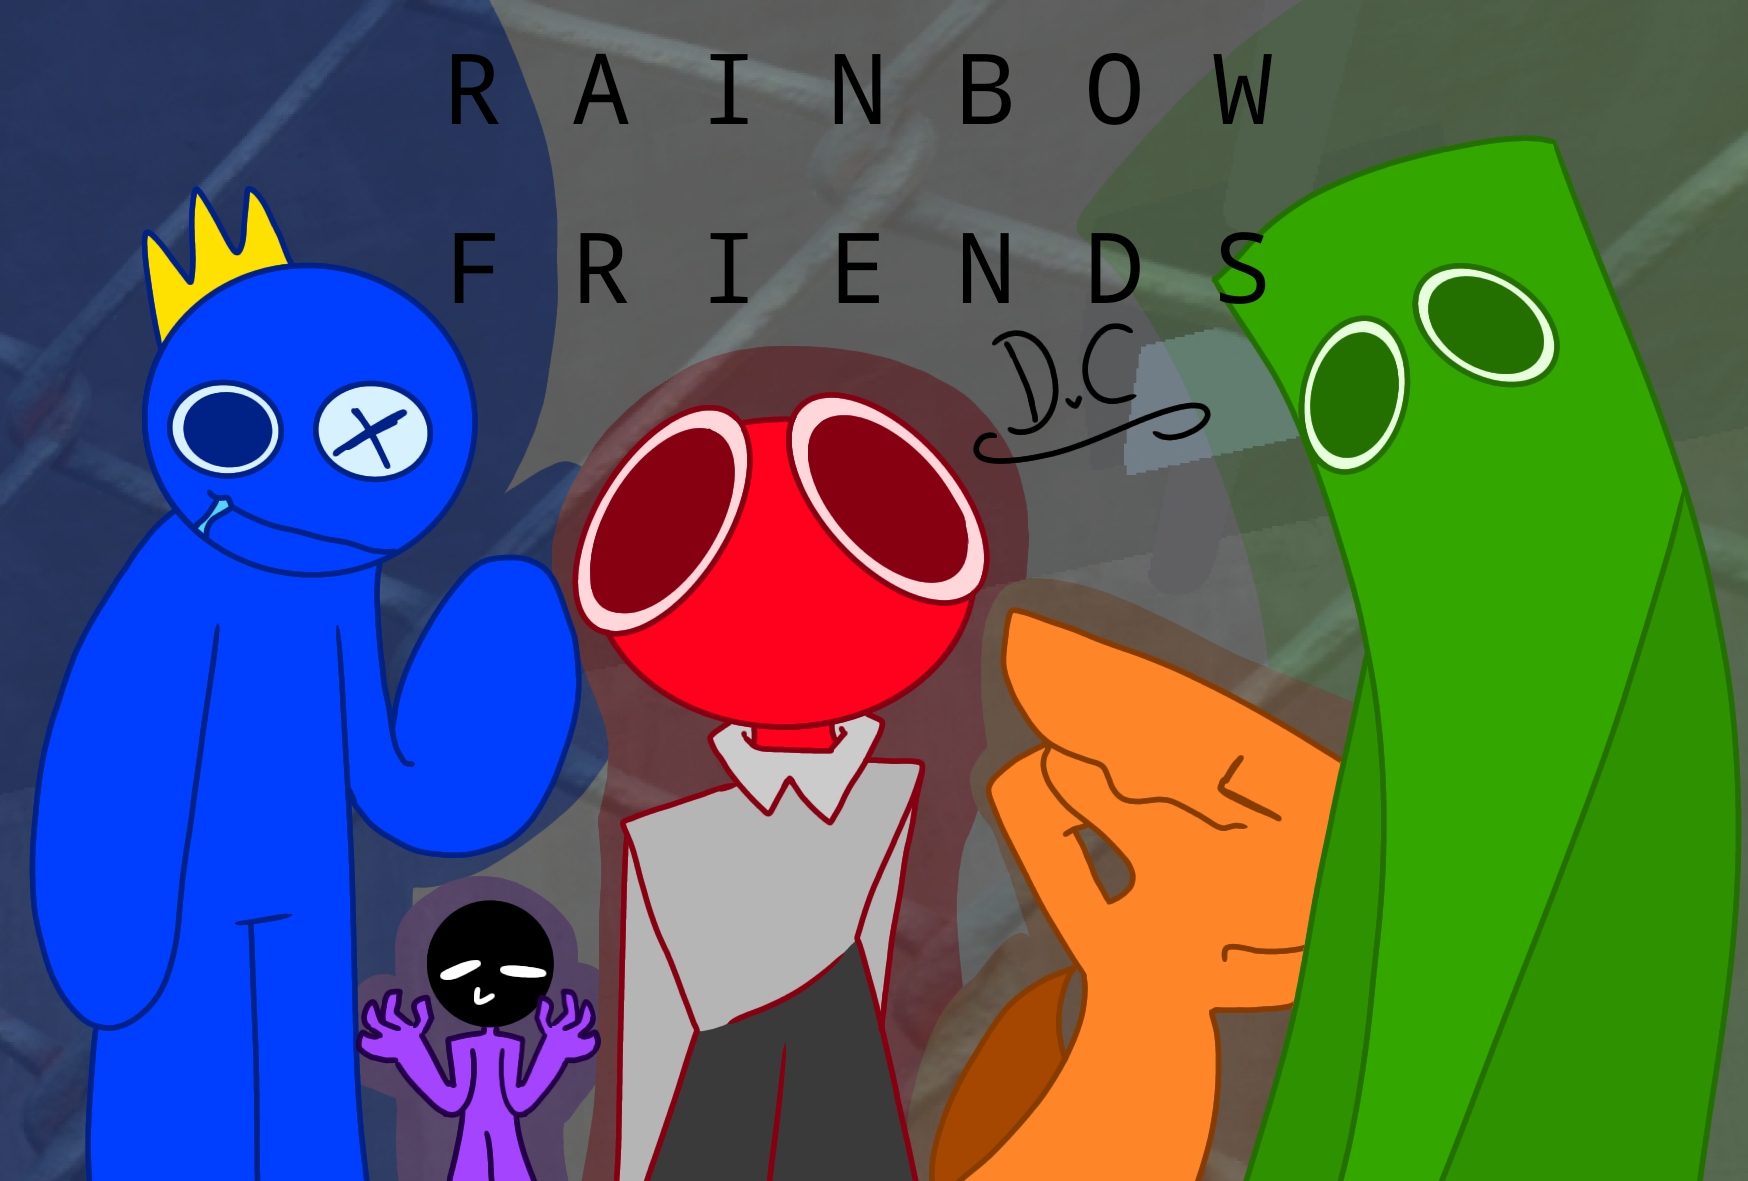 Rainbow friends roblox by Fnartgookd on DeviantArt